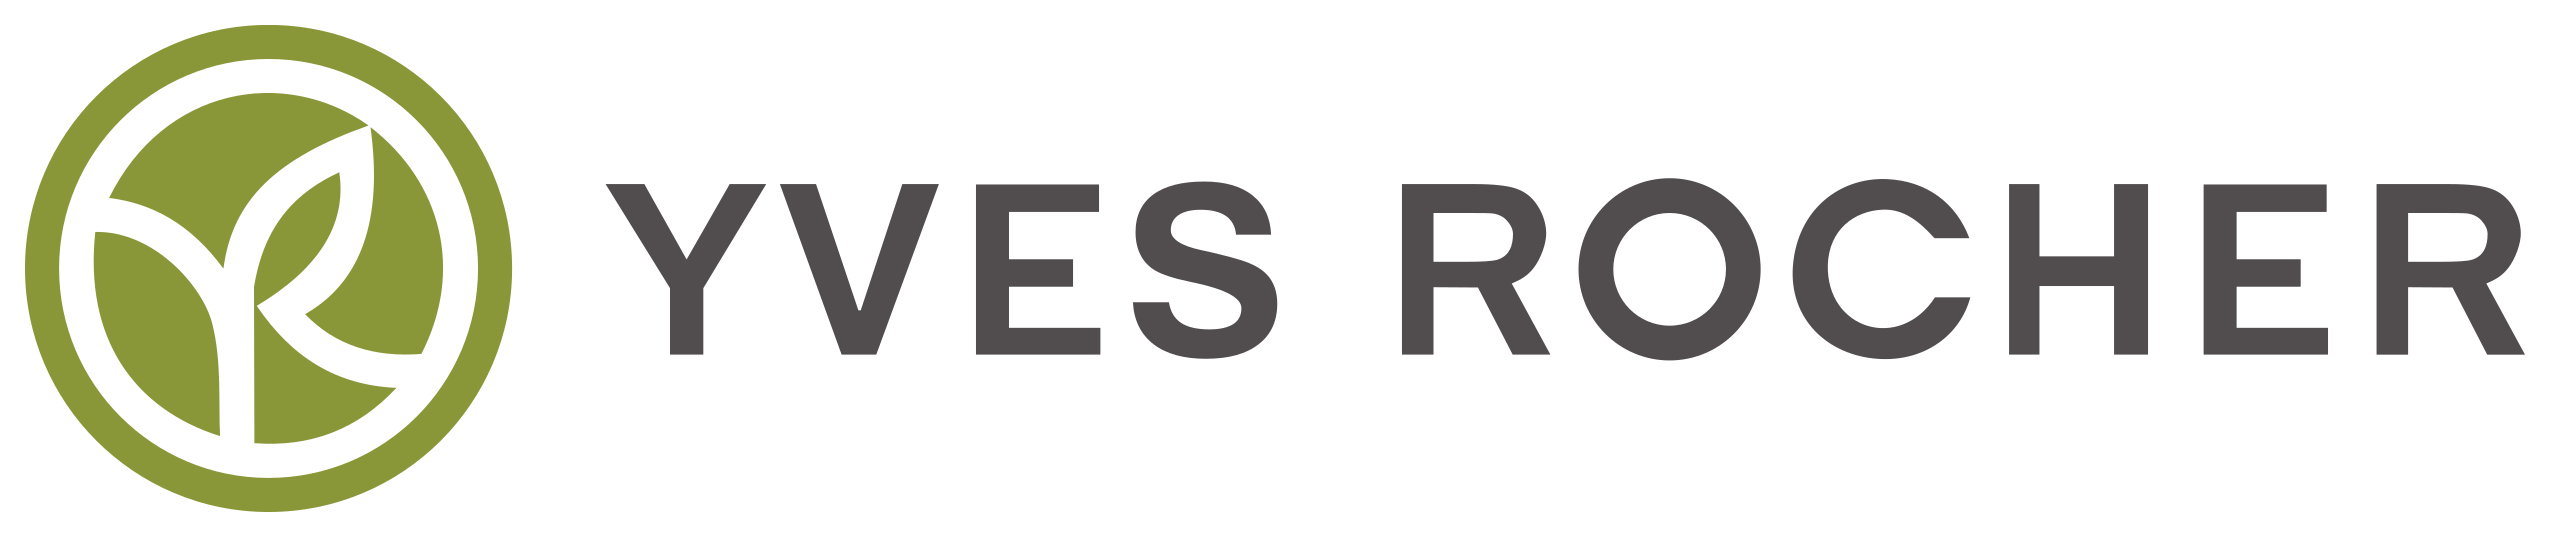 Yves_Rocher_logo.svg